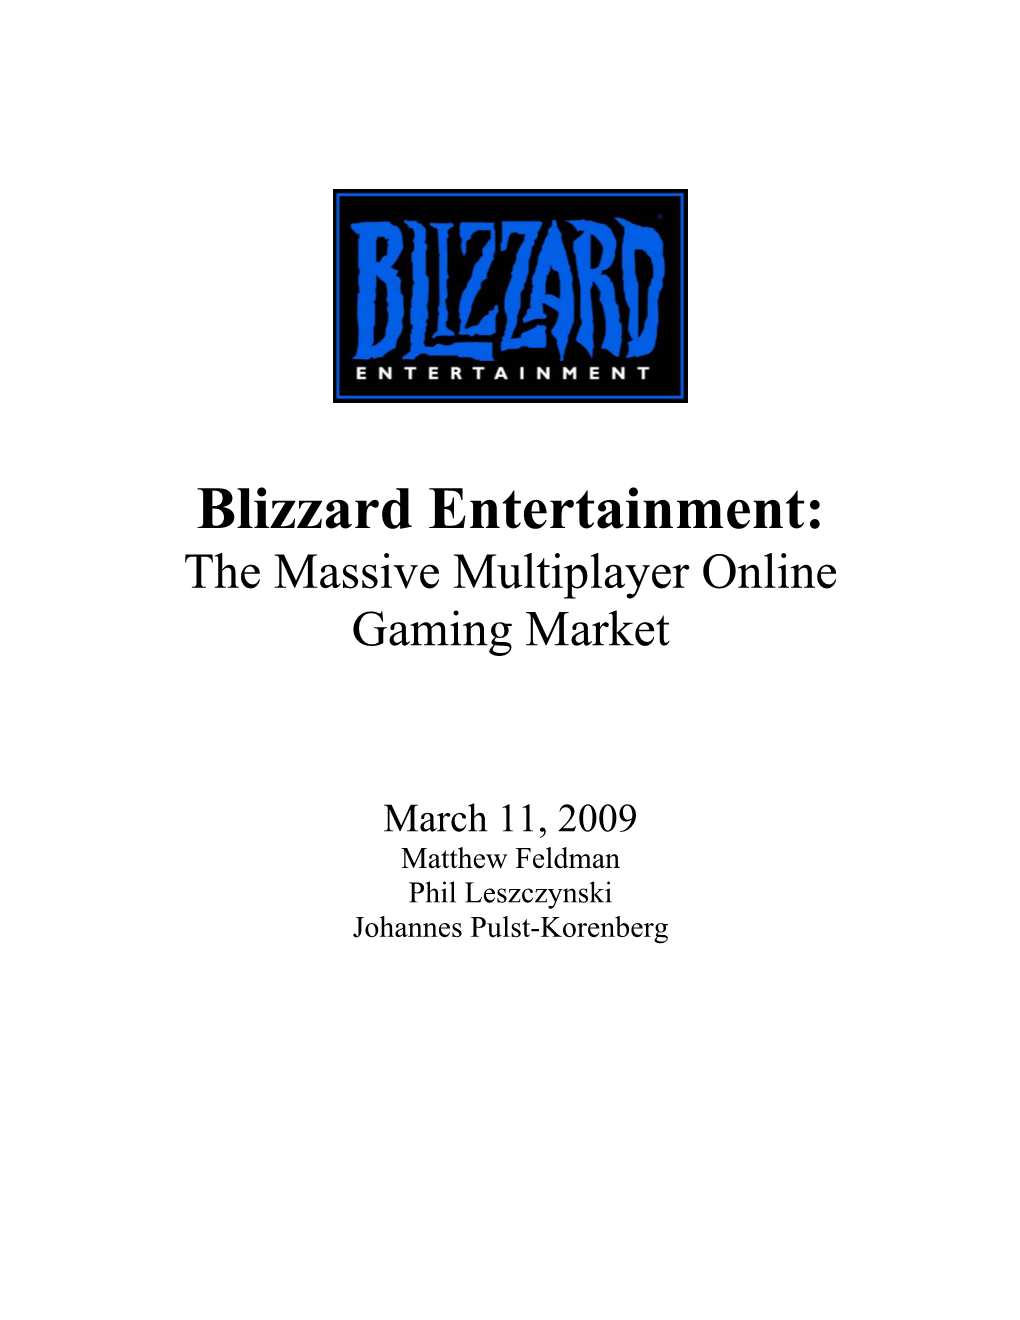 Blizzard Entertainment: the Massive Multiplayer Online Gaming Market